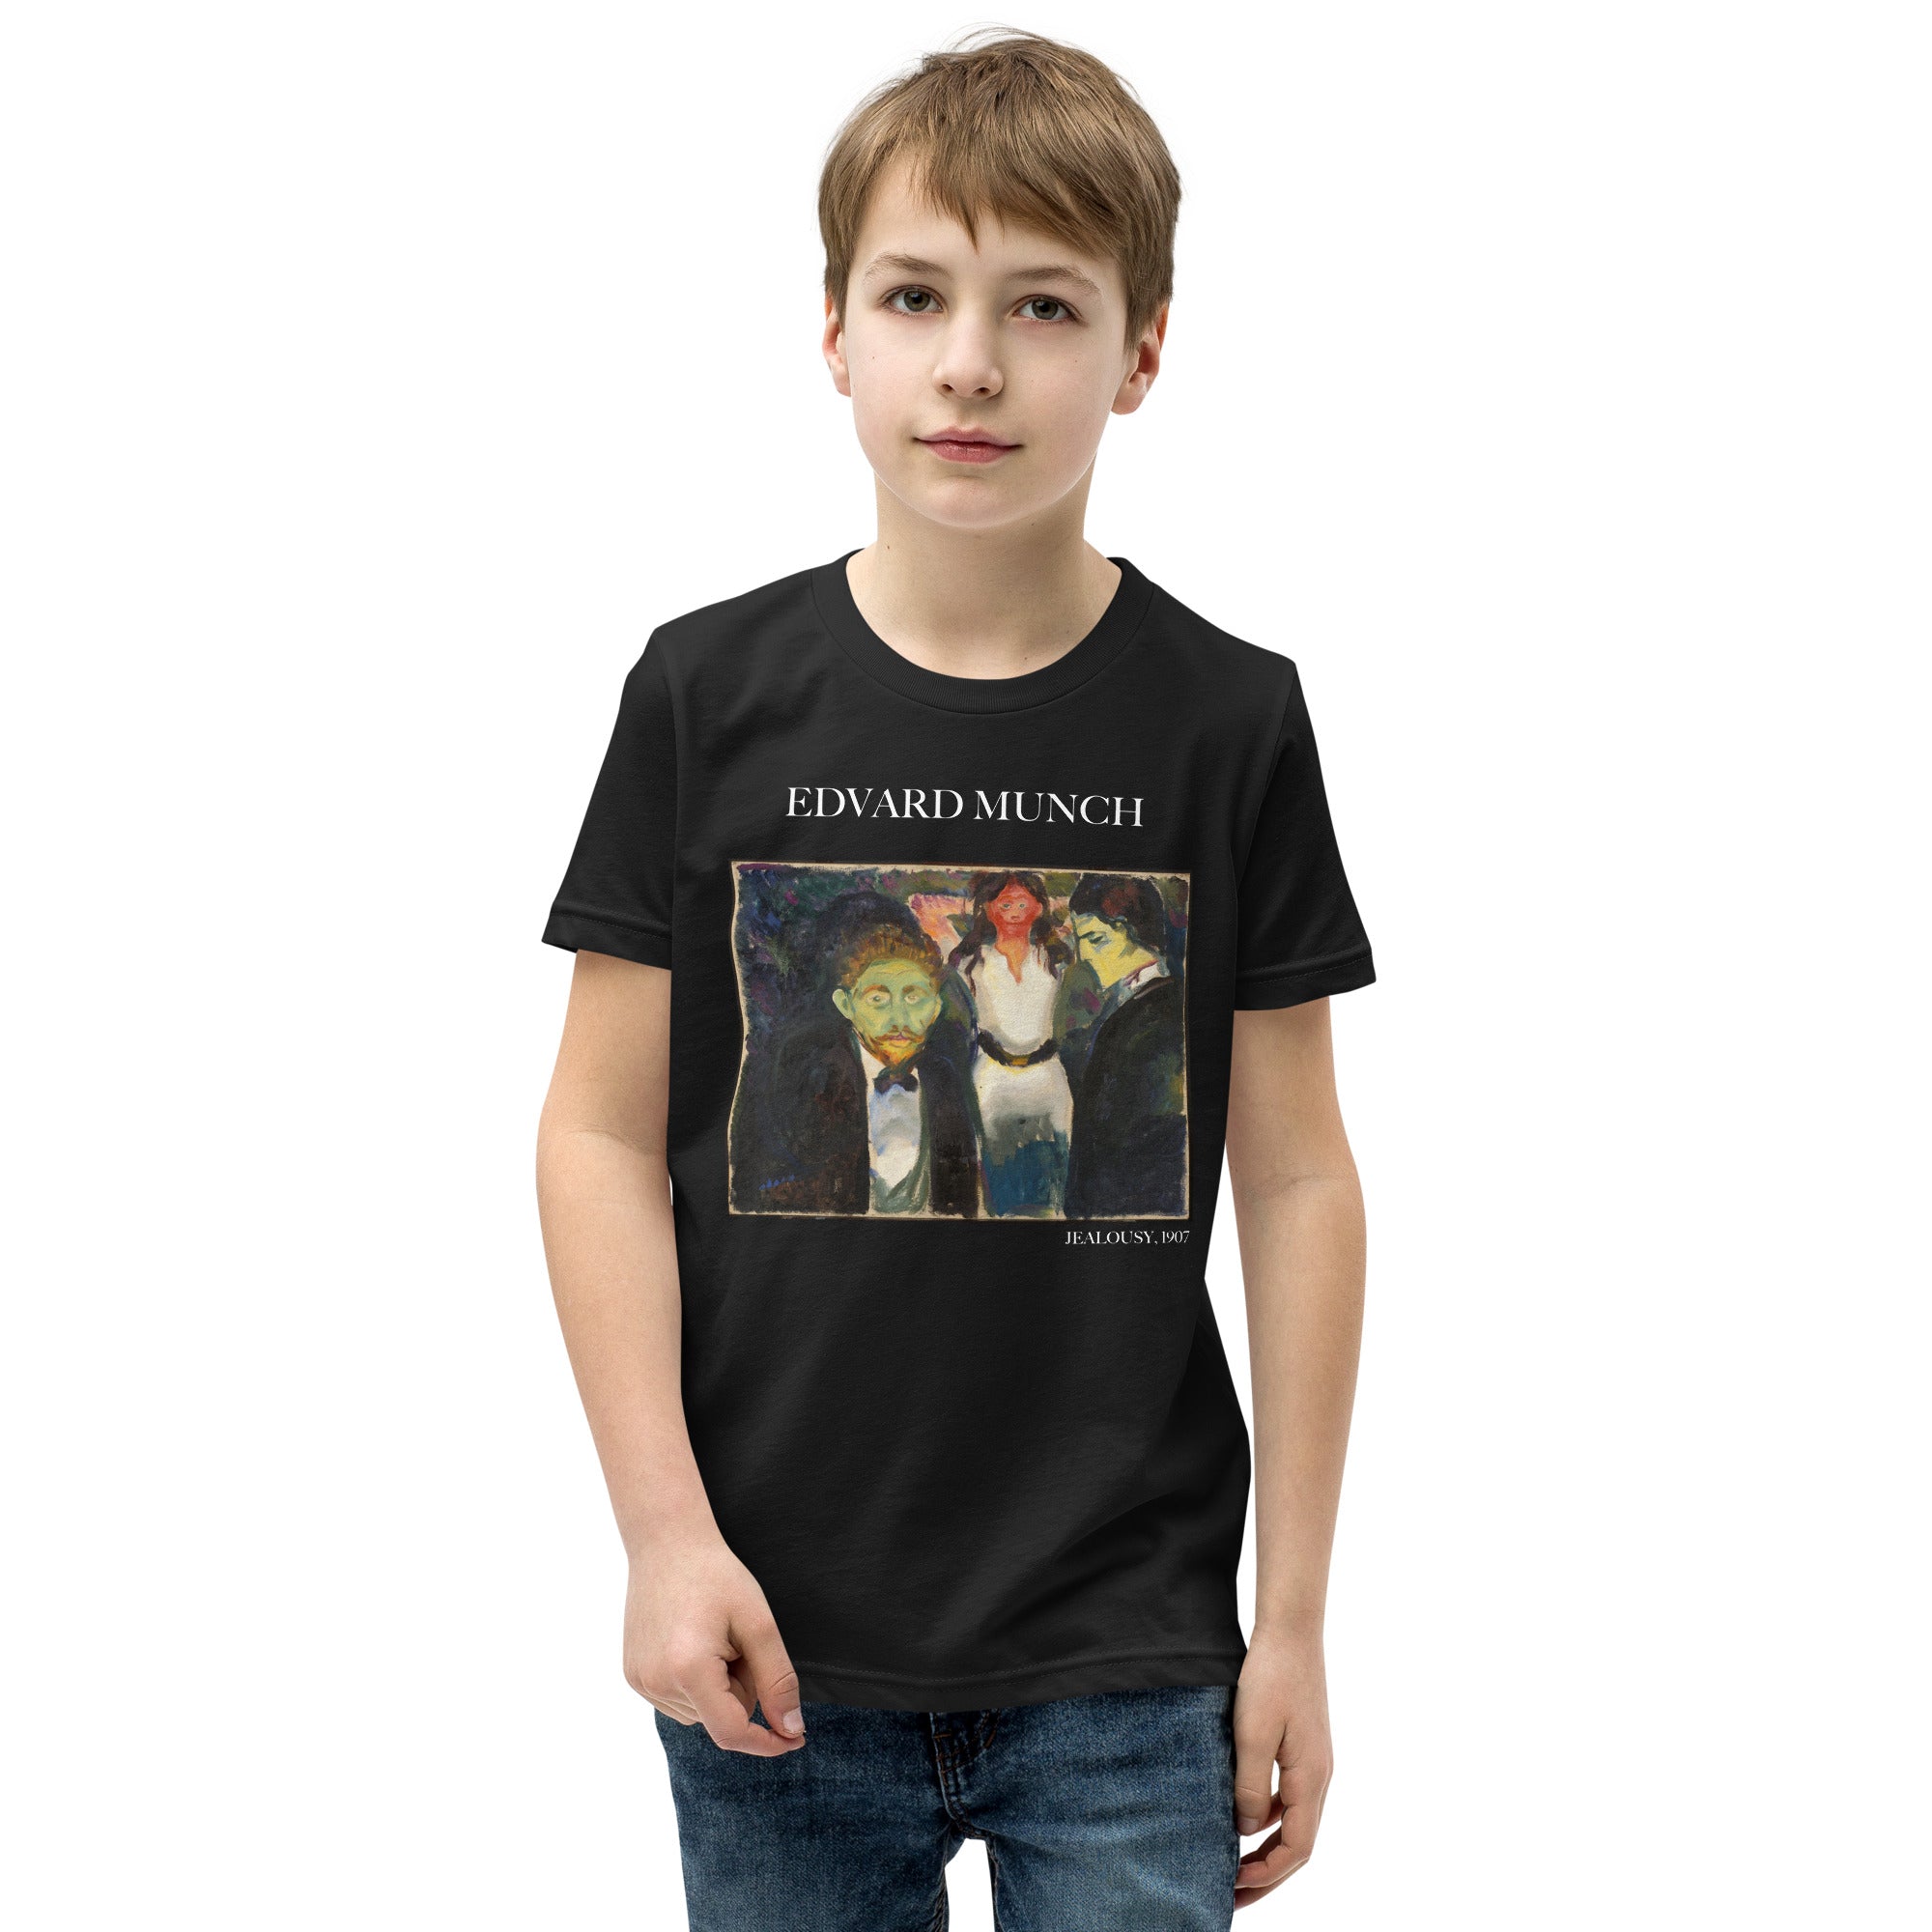 Edvard Munch 'Jealousy' Famous Painting Short Sleeve T-Shirt | Premium Youth Art Tee